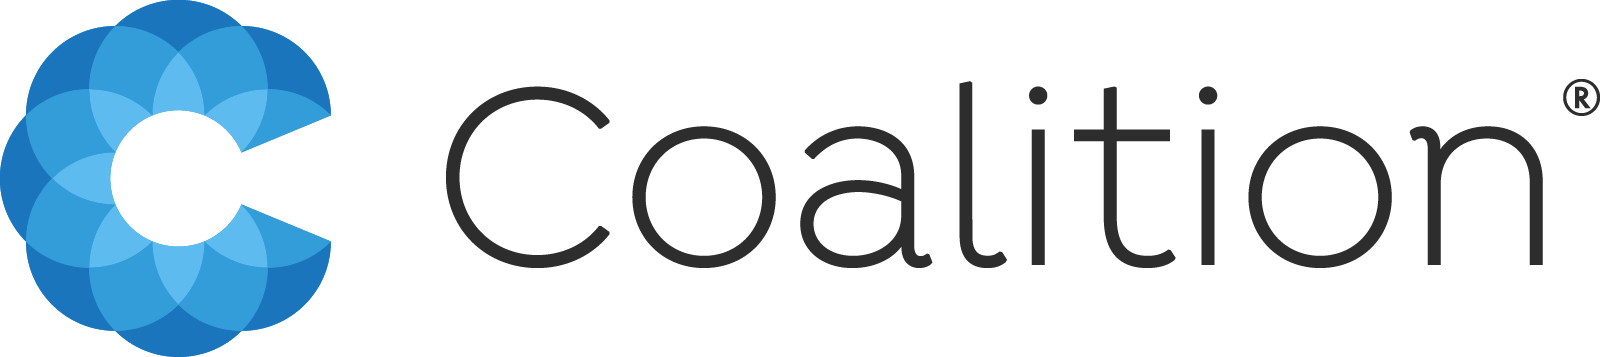 coalition-logo.png